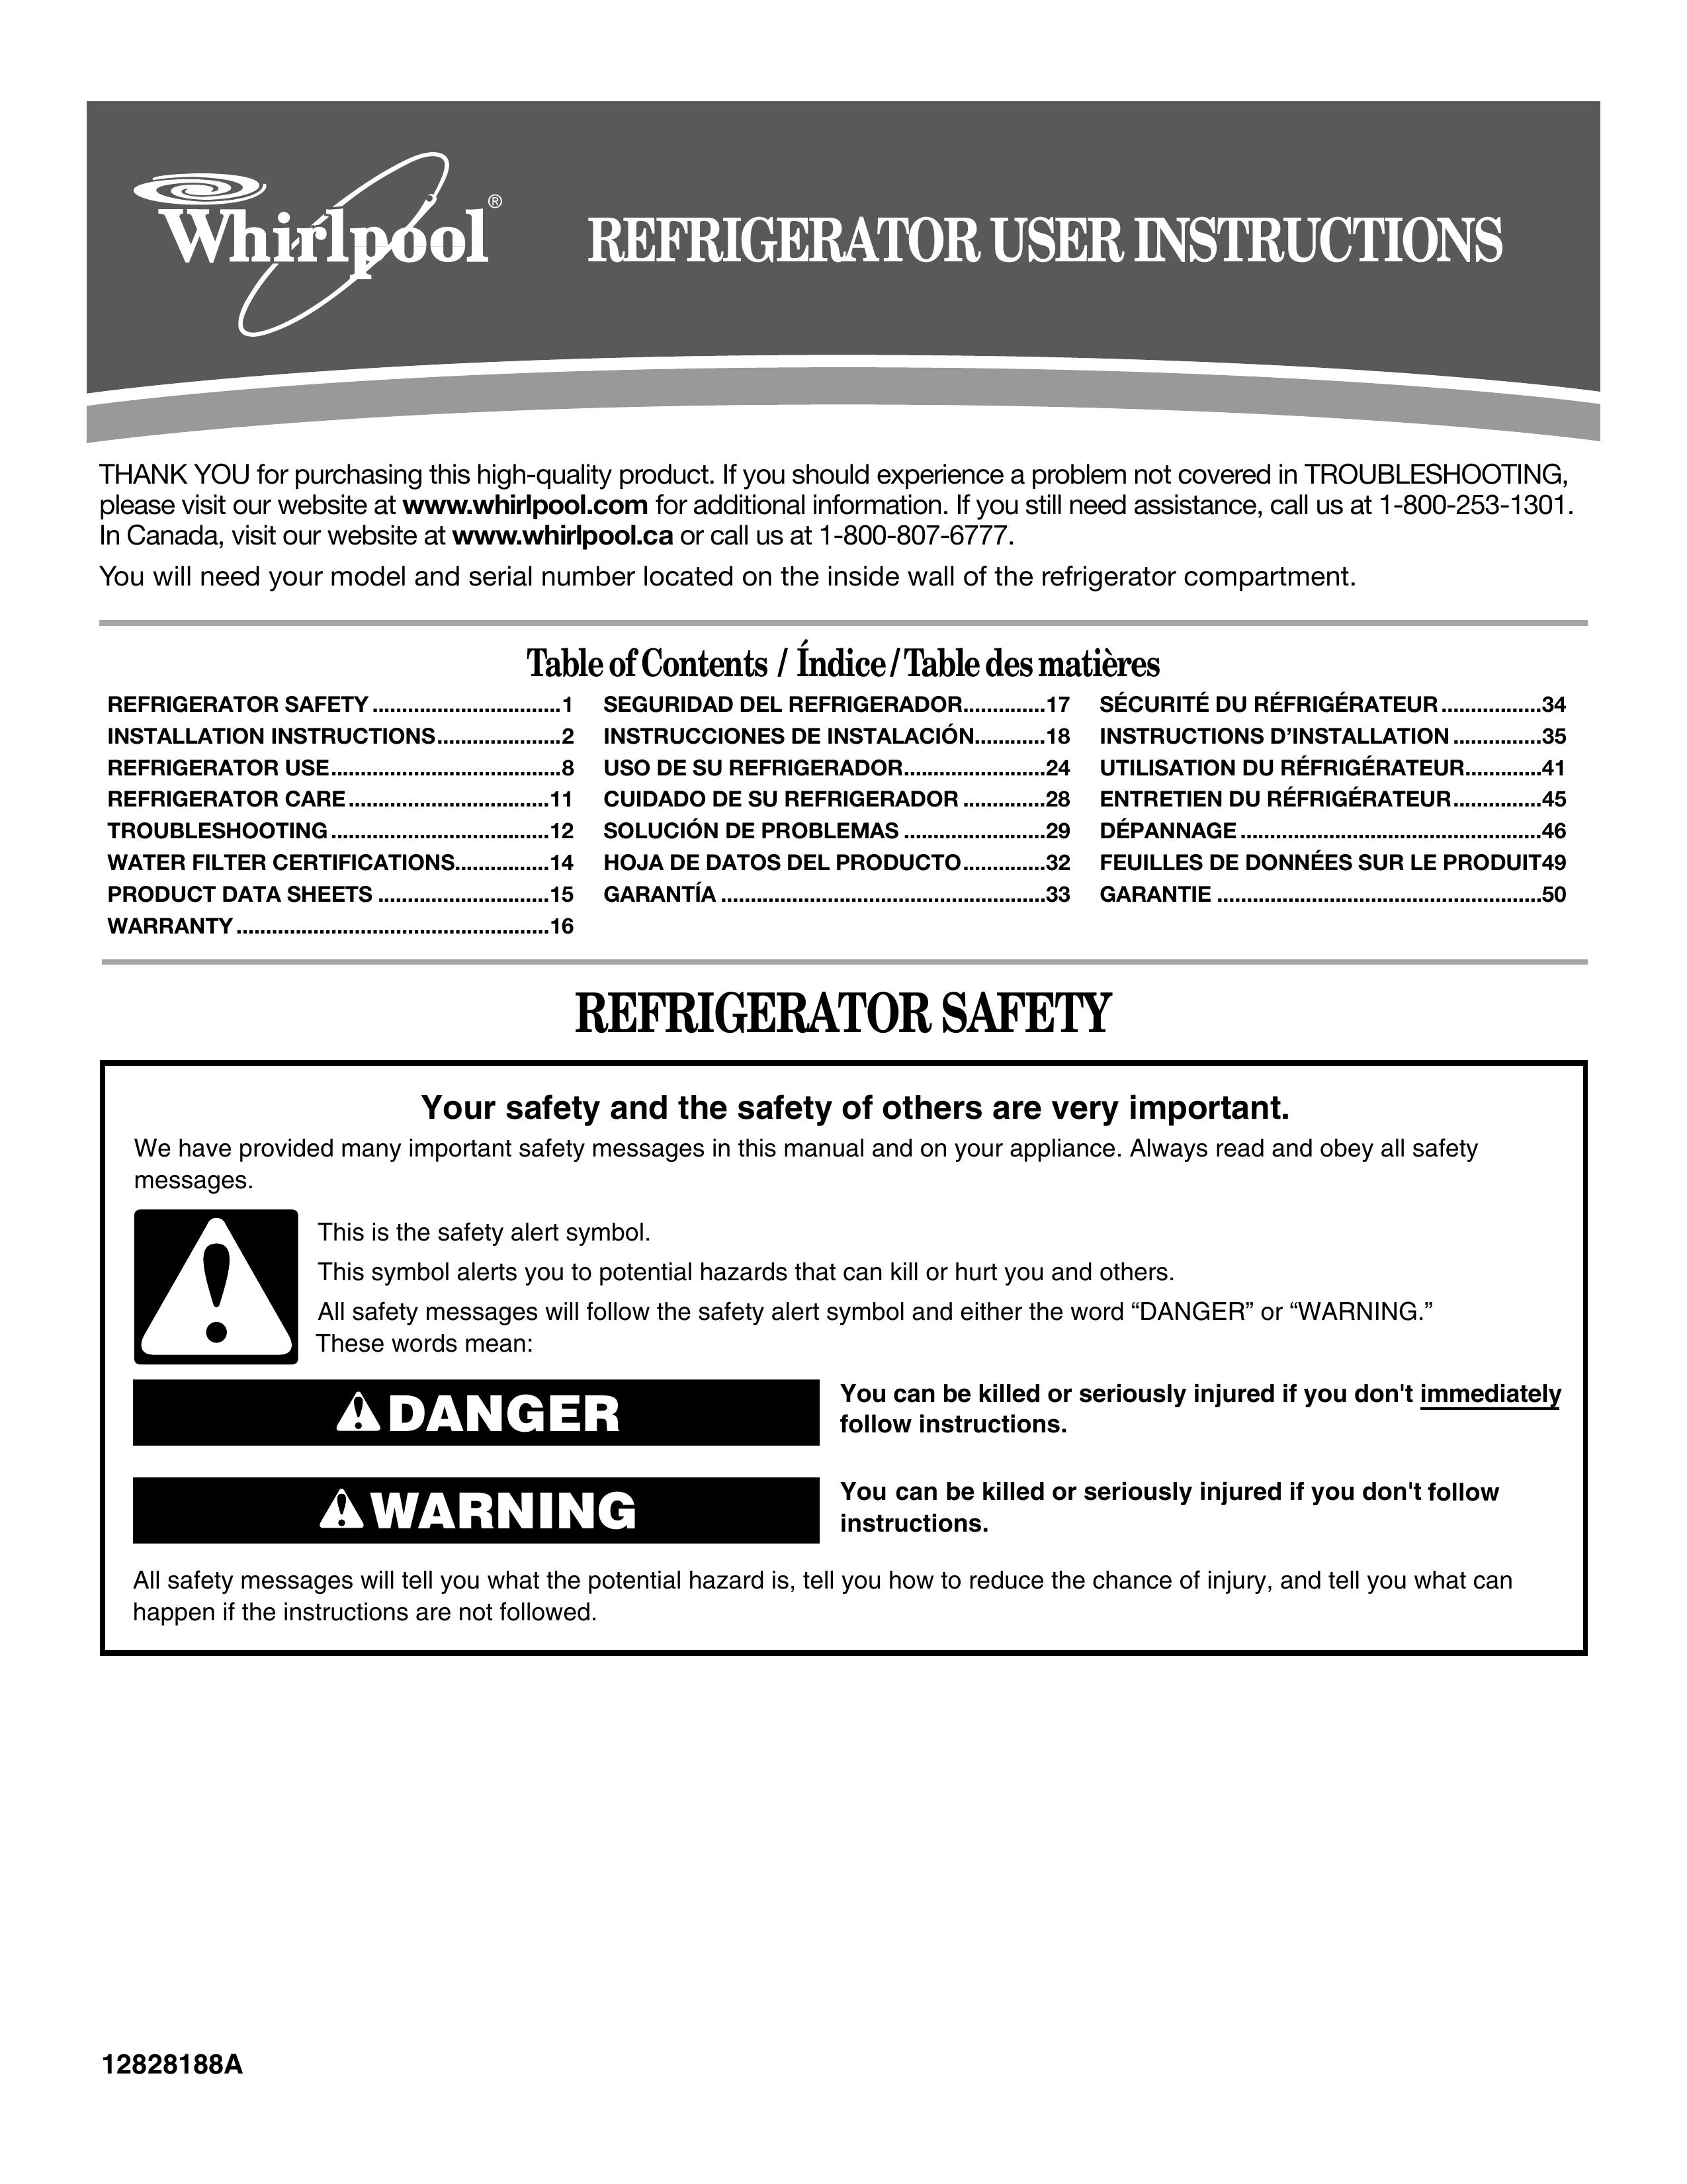 Whirlpool 12828188A Refrigerator User Manual